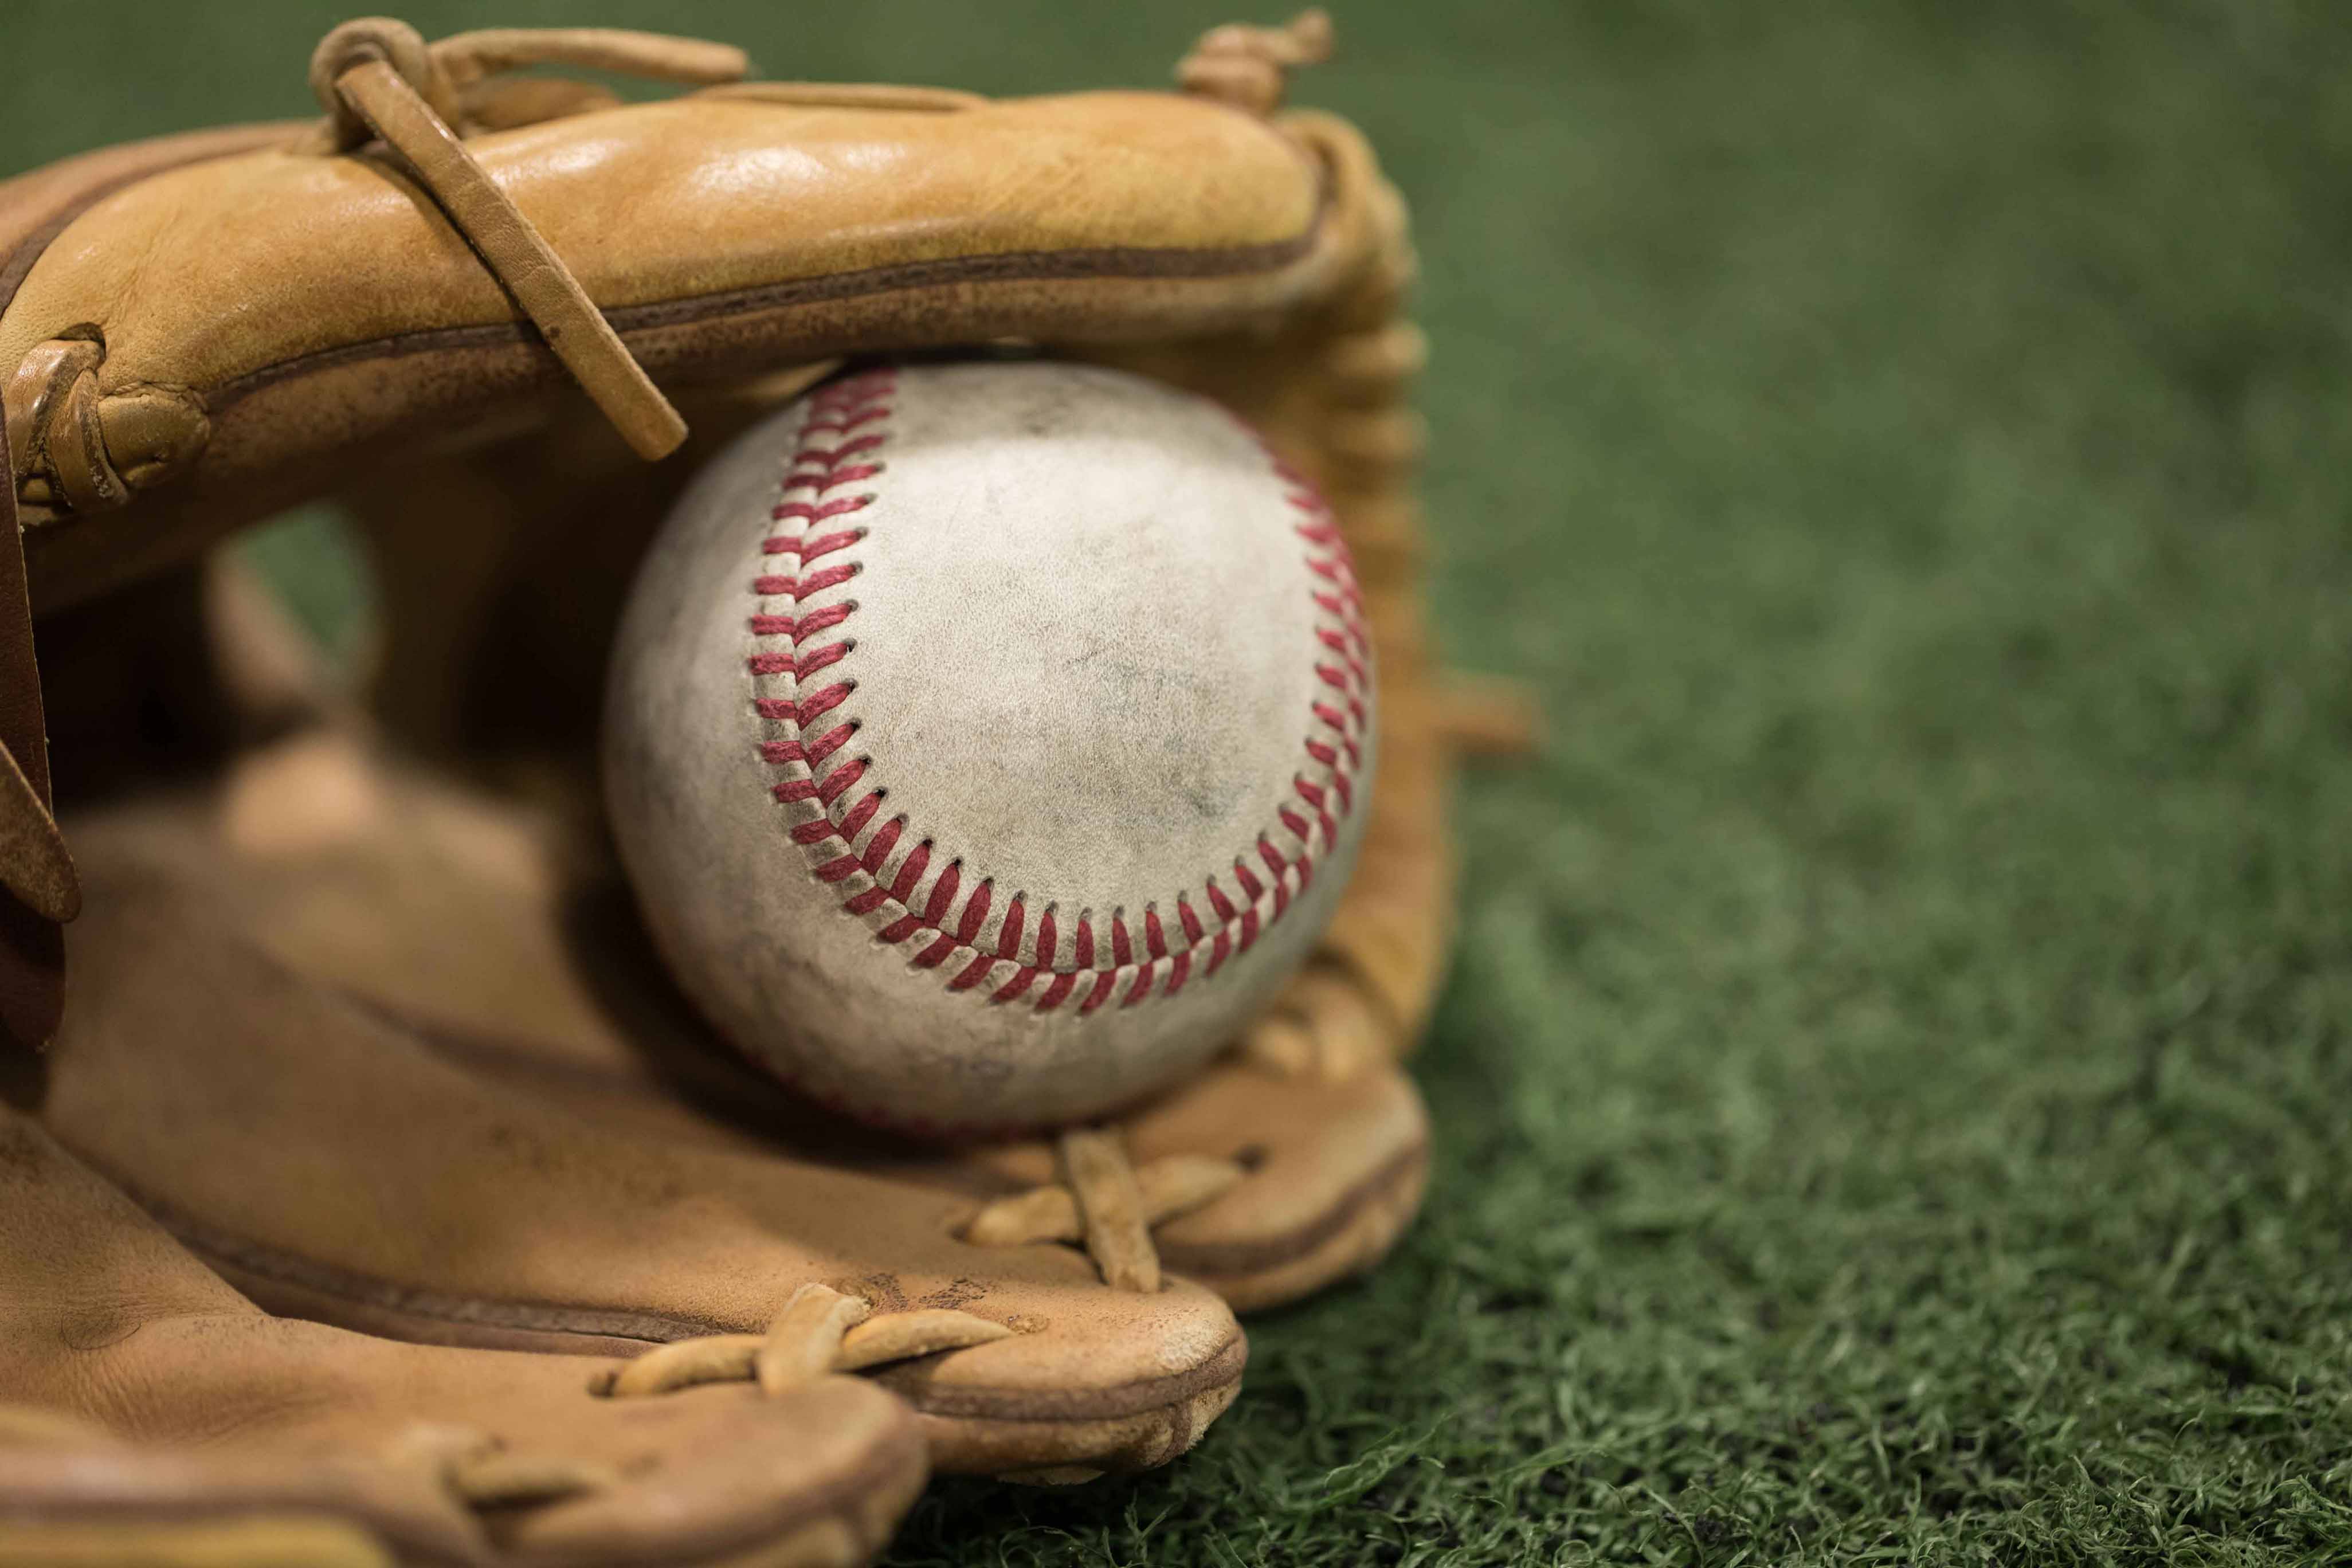 a baseball mitt on the ground holding a baseball